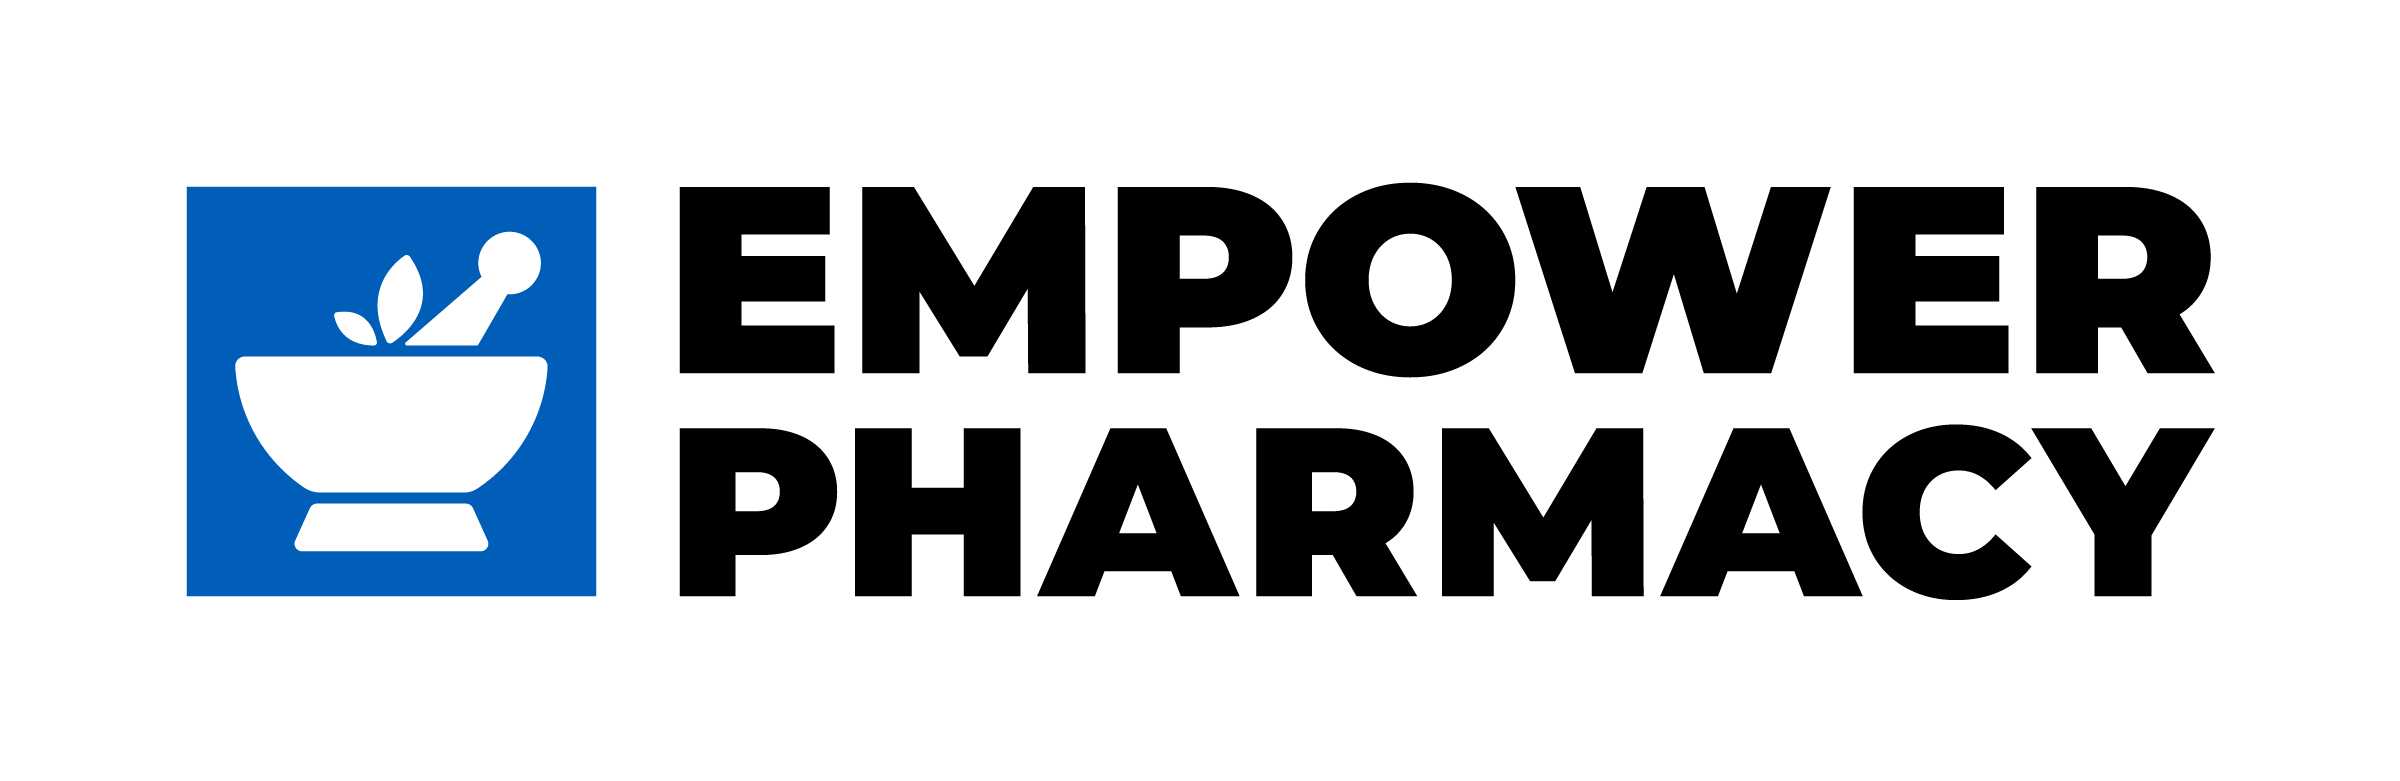 Empower Pharmacy Logo